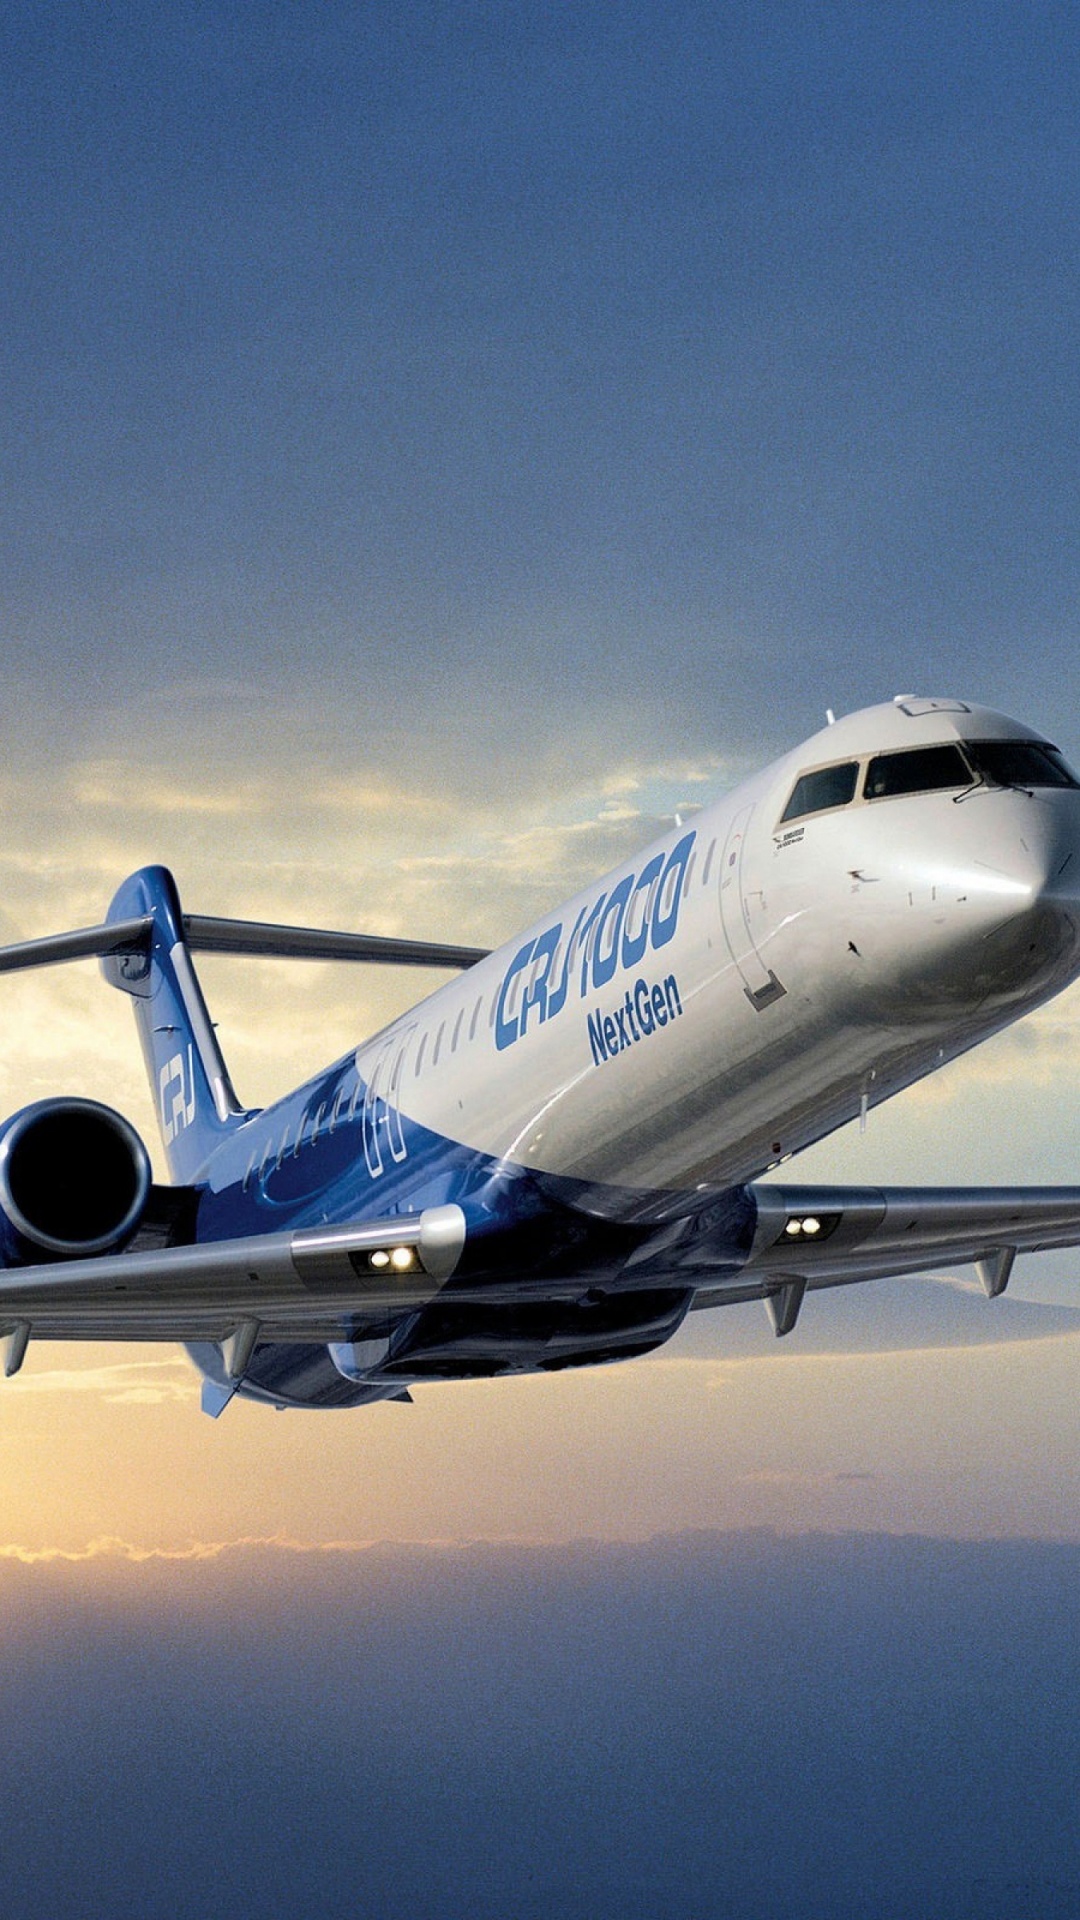 White and Blue Passenger Plane in Flight. Wallpaper in 1080x1920 Resolution